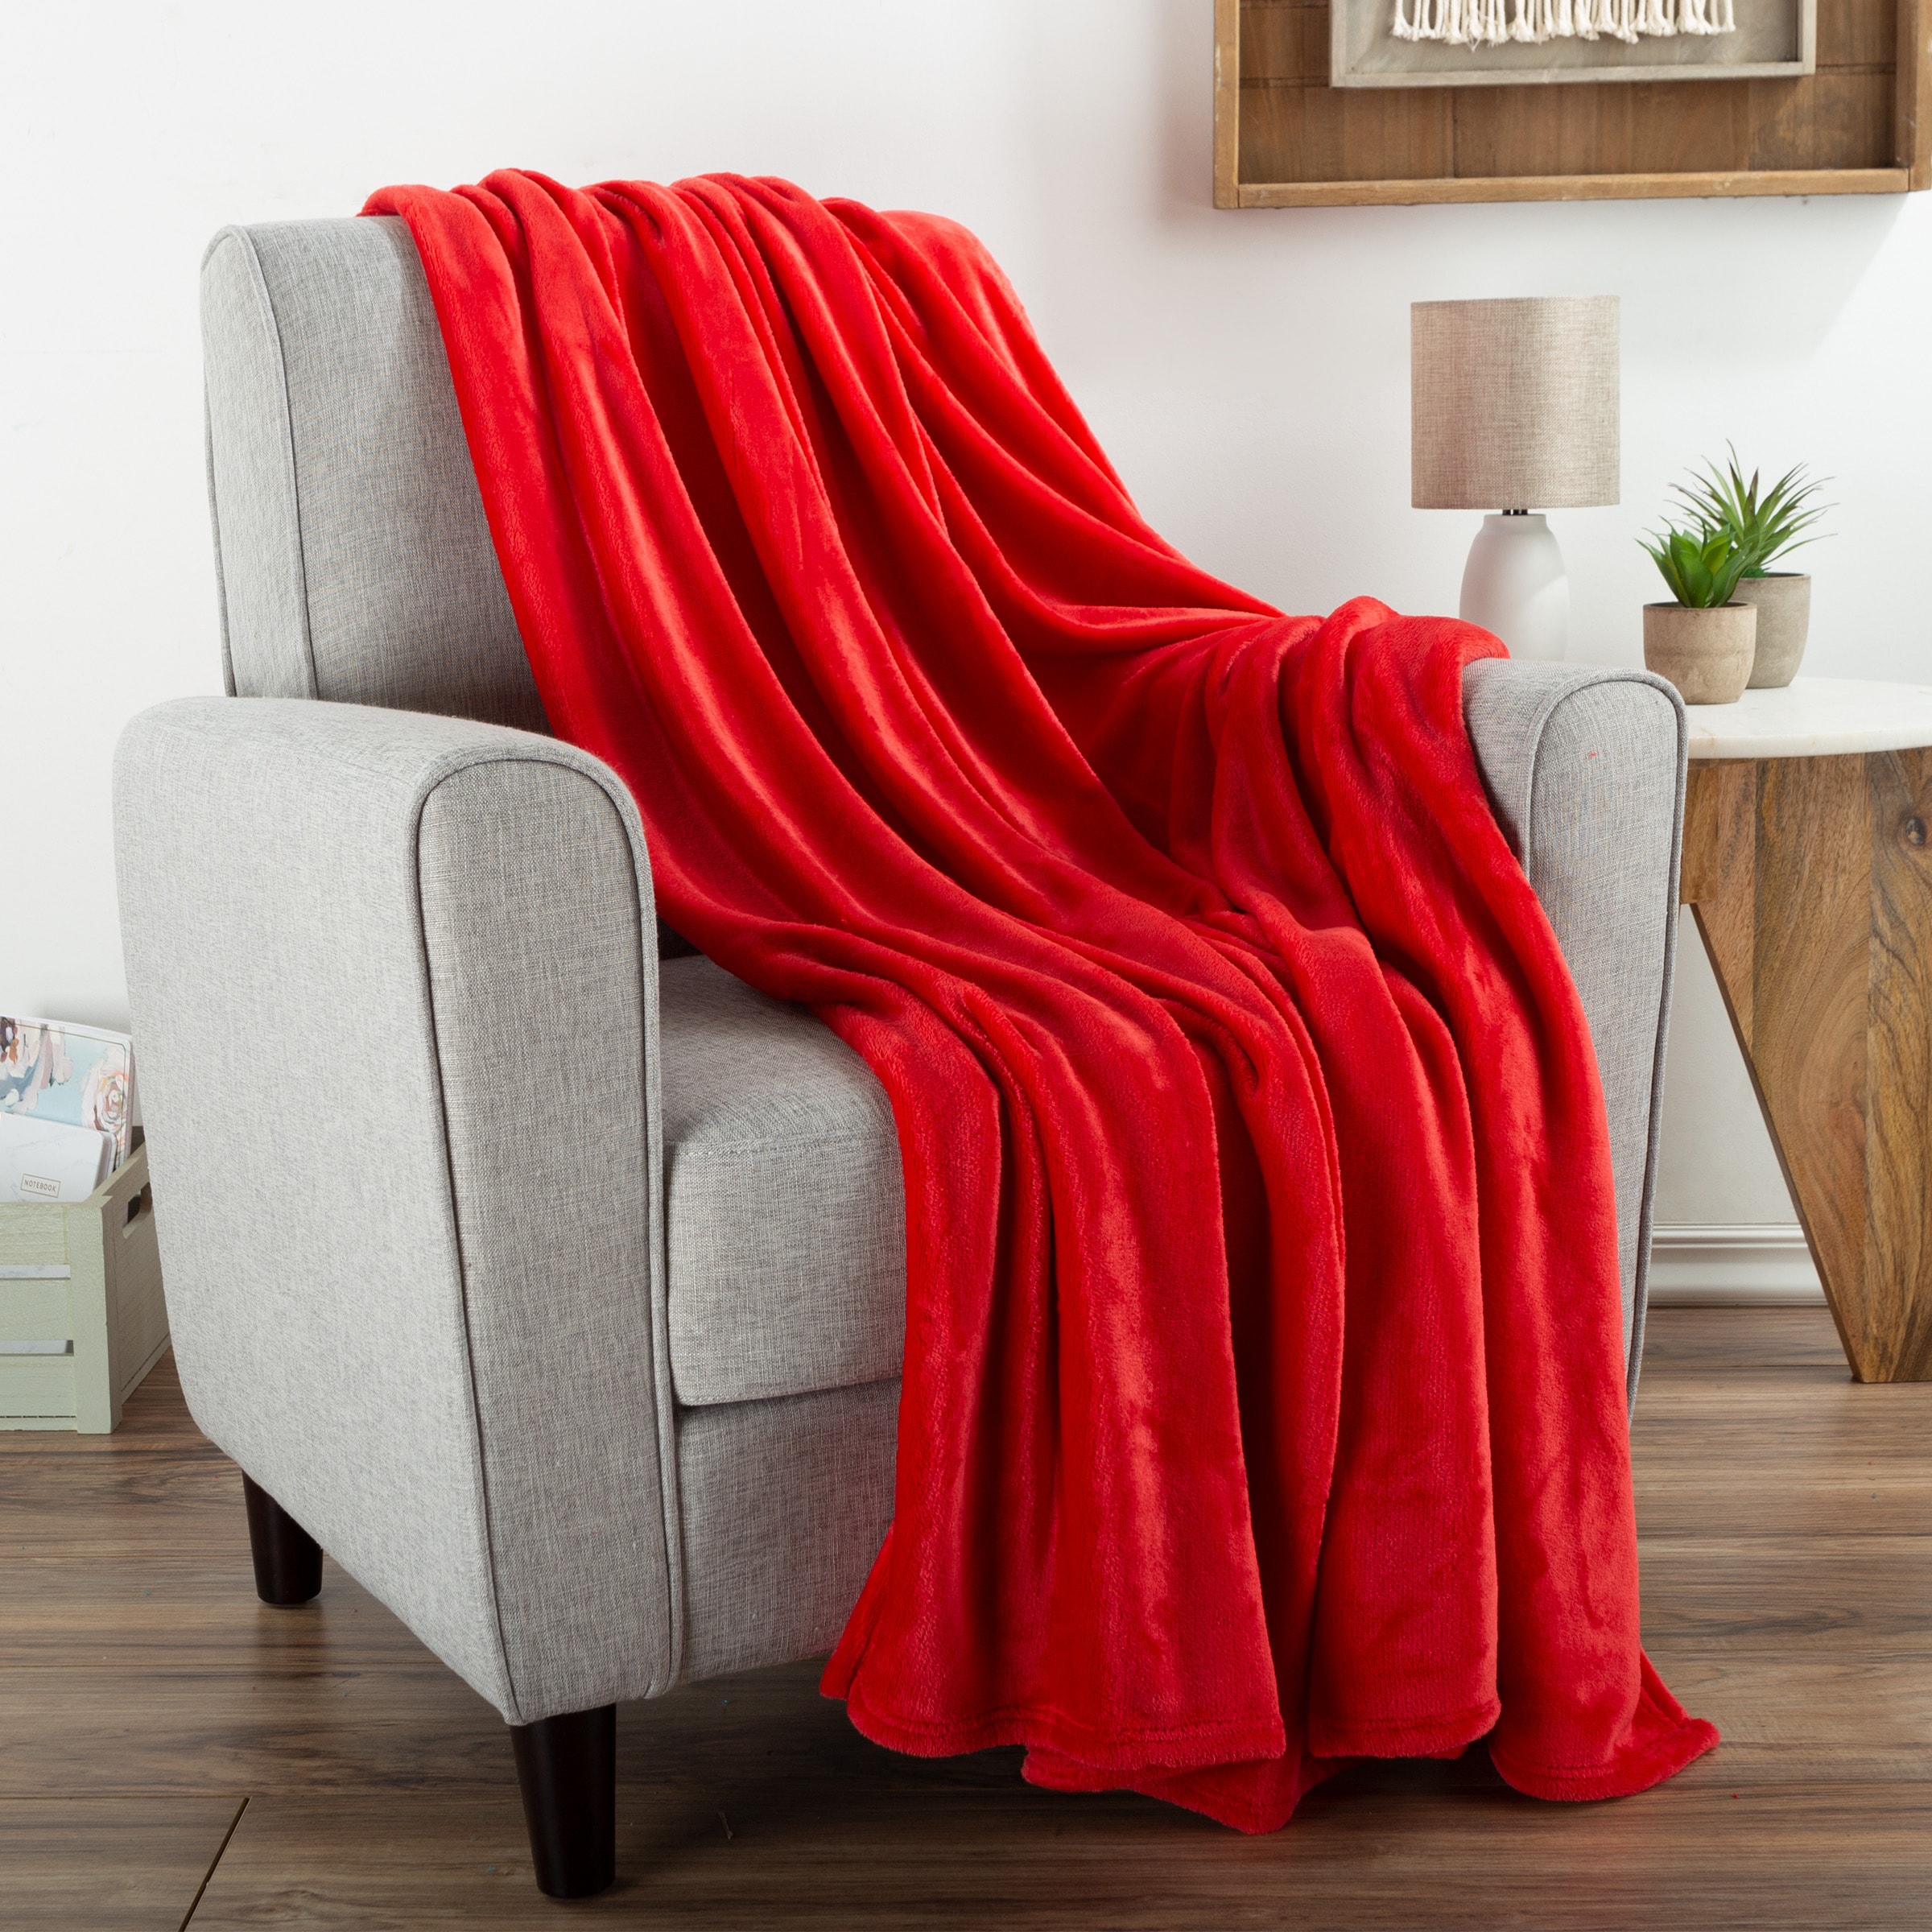 Contemporary Home Living Set of 2 Teal Green Rectangular Fleece Throw Blanket 60 